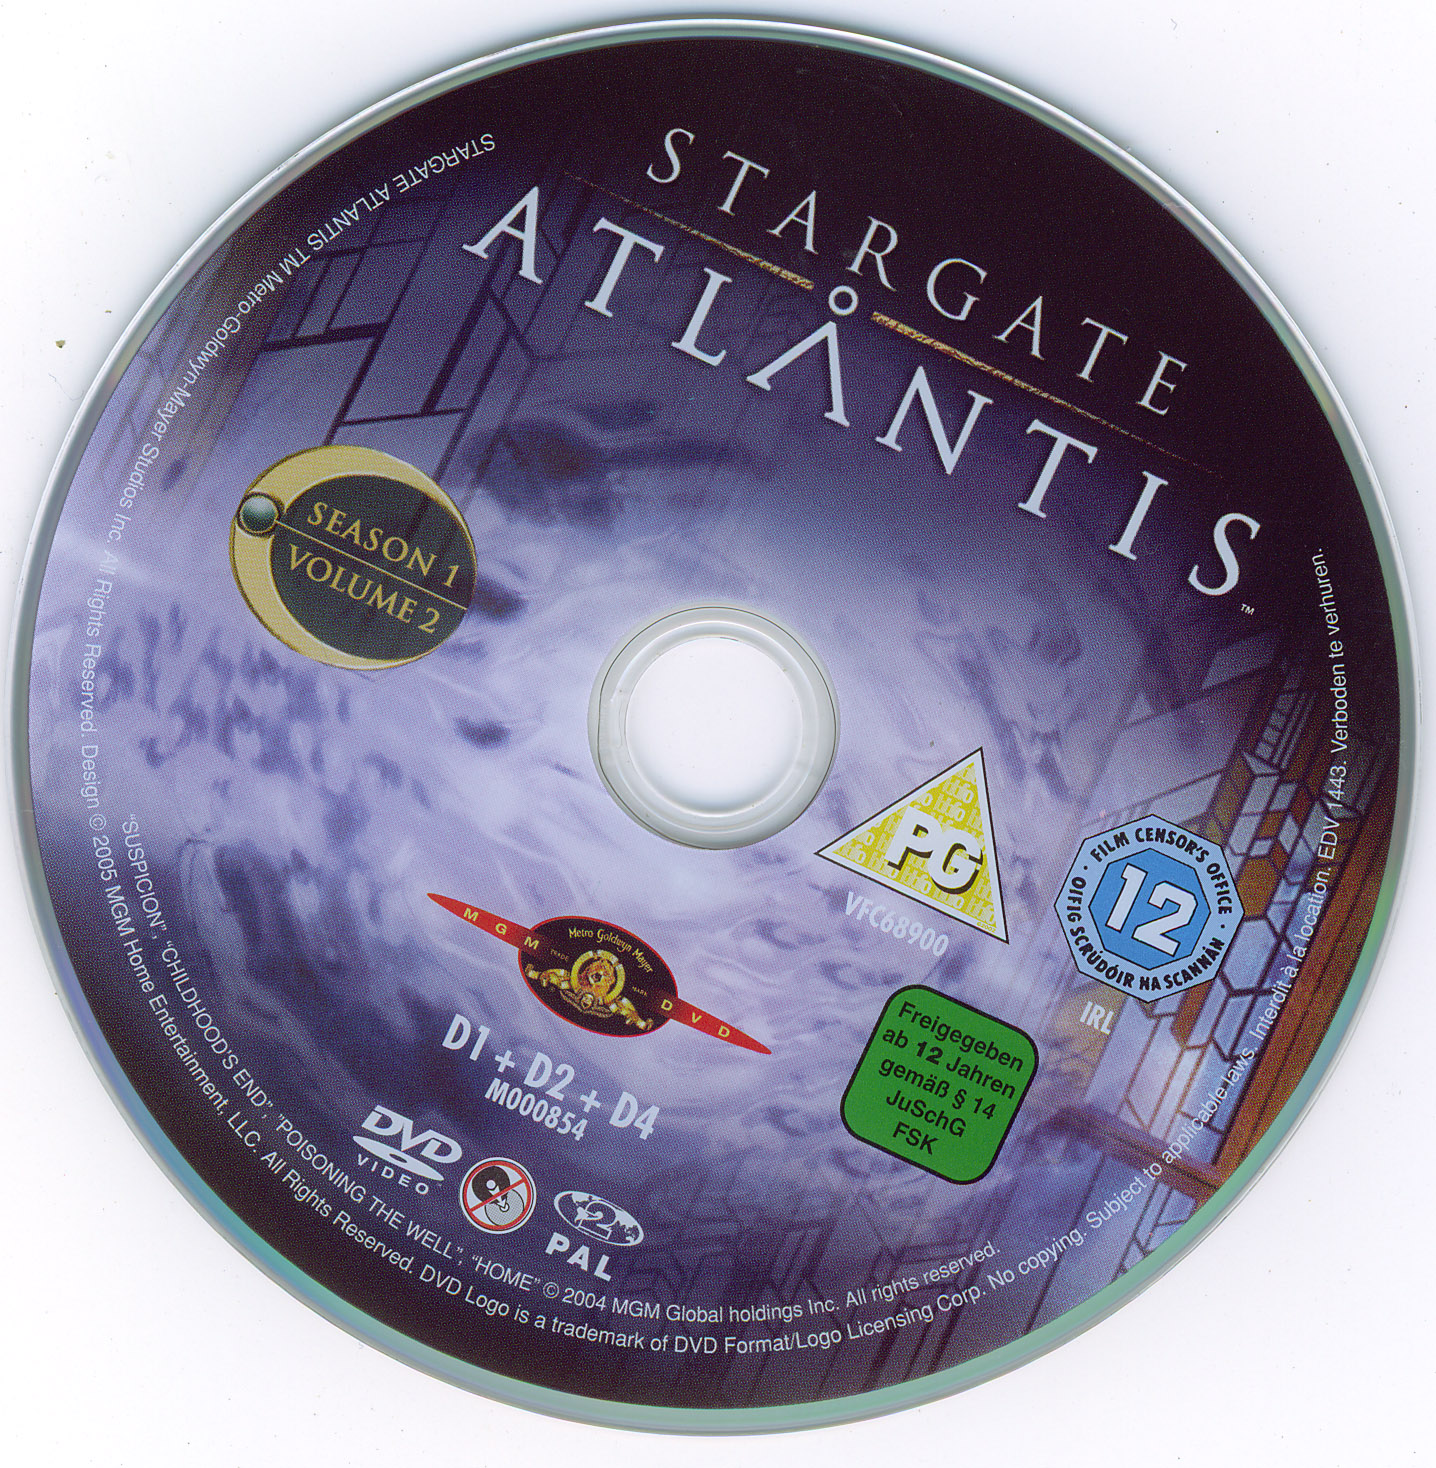 Stargate Atlantis saison 1 vol 2